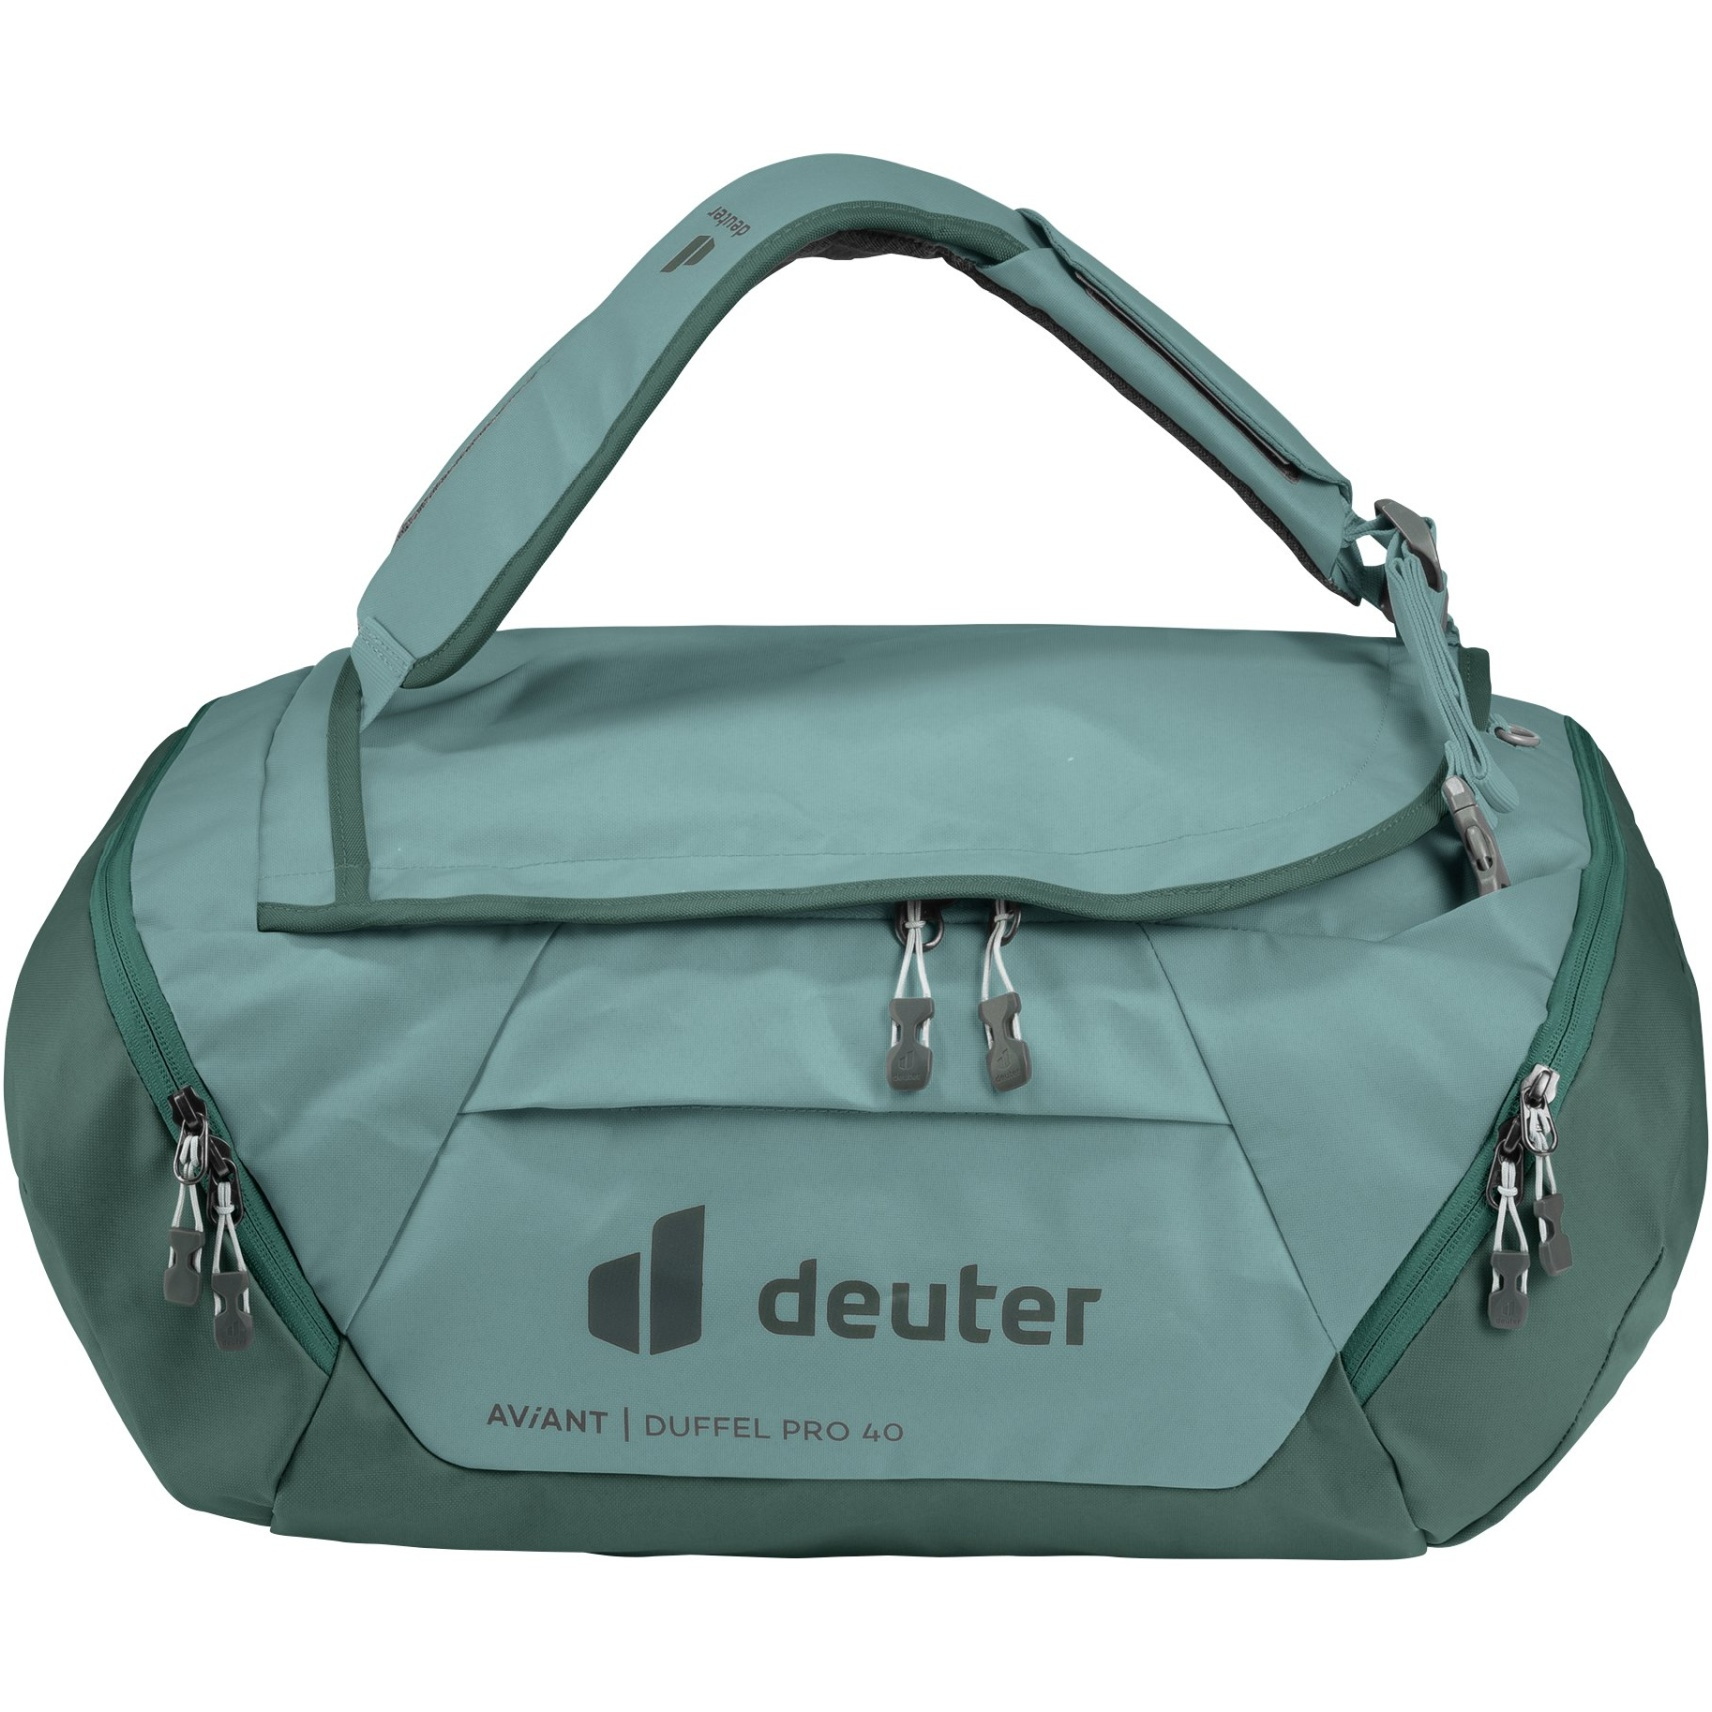 Deuter 40 AViANT BIKE24 | - Pro Reisetasche Duffel jade-seagreen